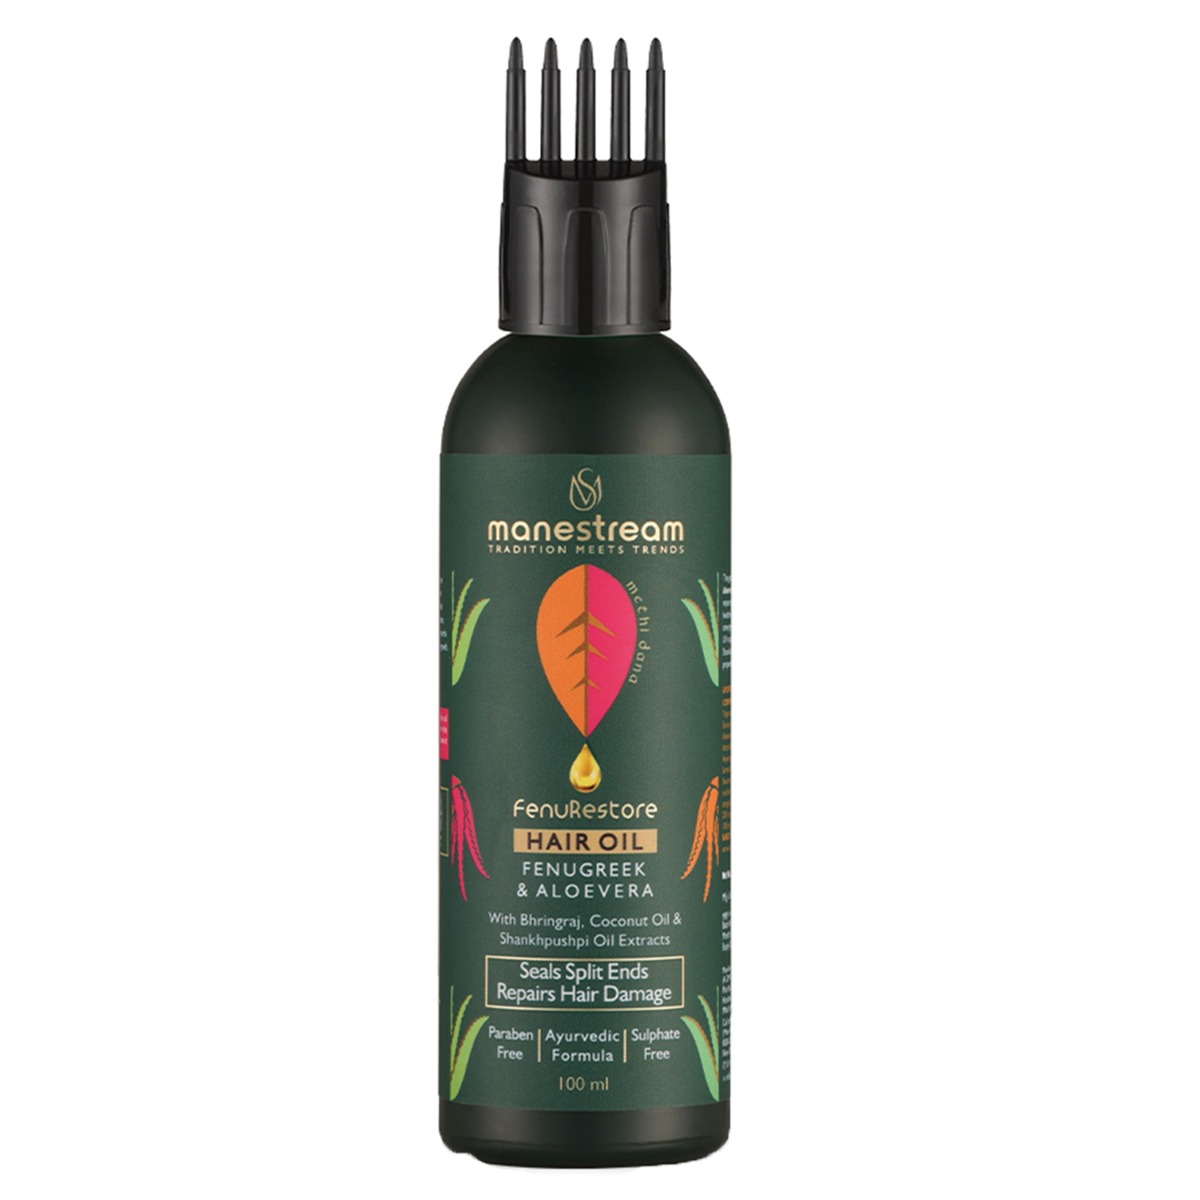 Manestream Fenurestore Ayurvedic Hair Oil With Fenugreek And Aloevera For Damaged Hair Repair, Sealing Split Ends, Hair Nourishment, 100ml